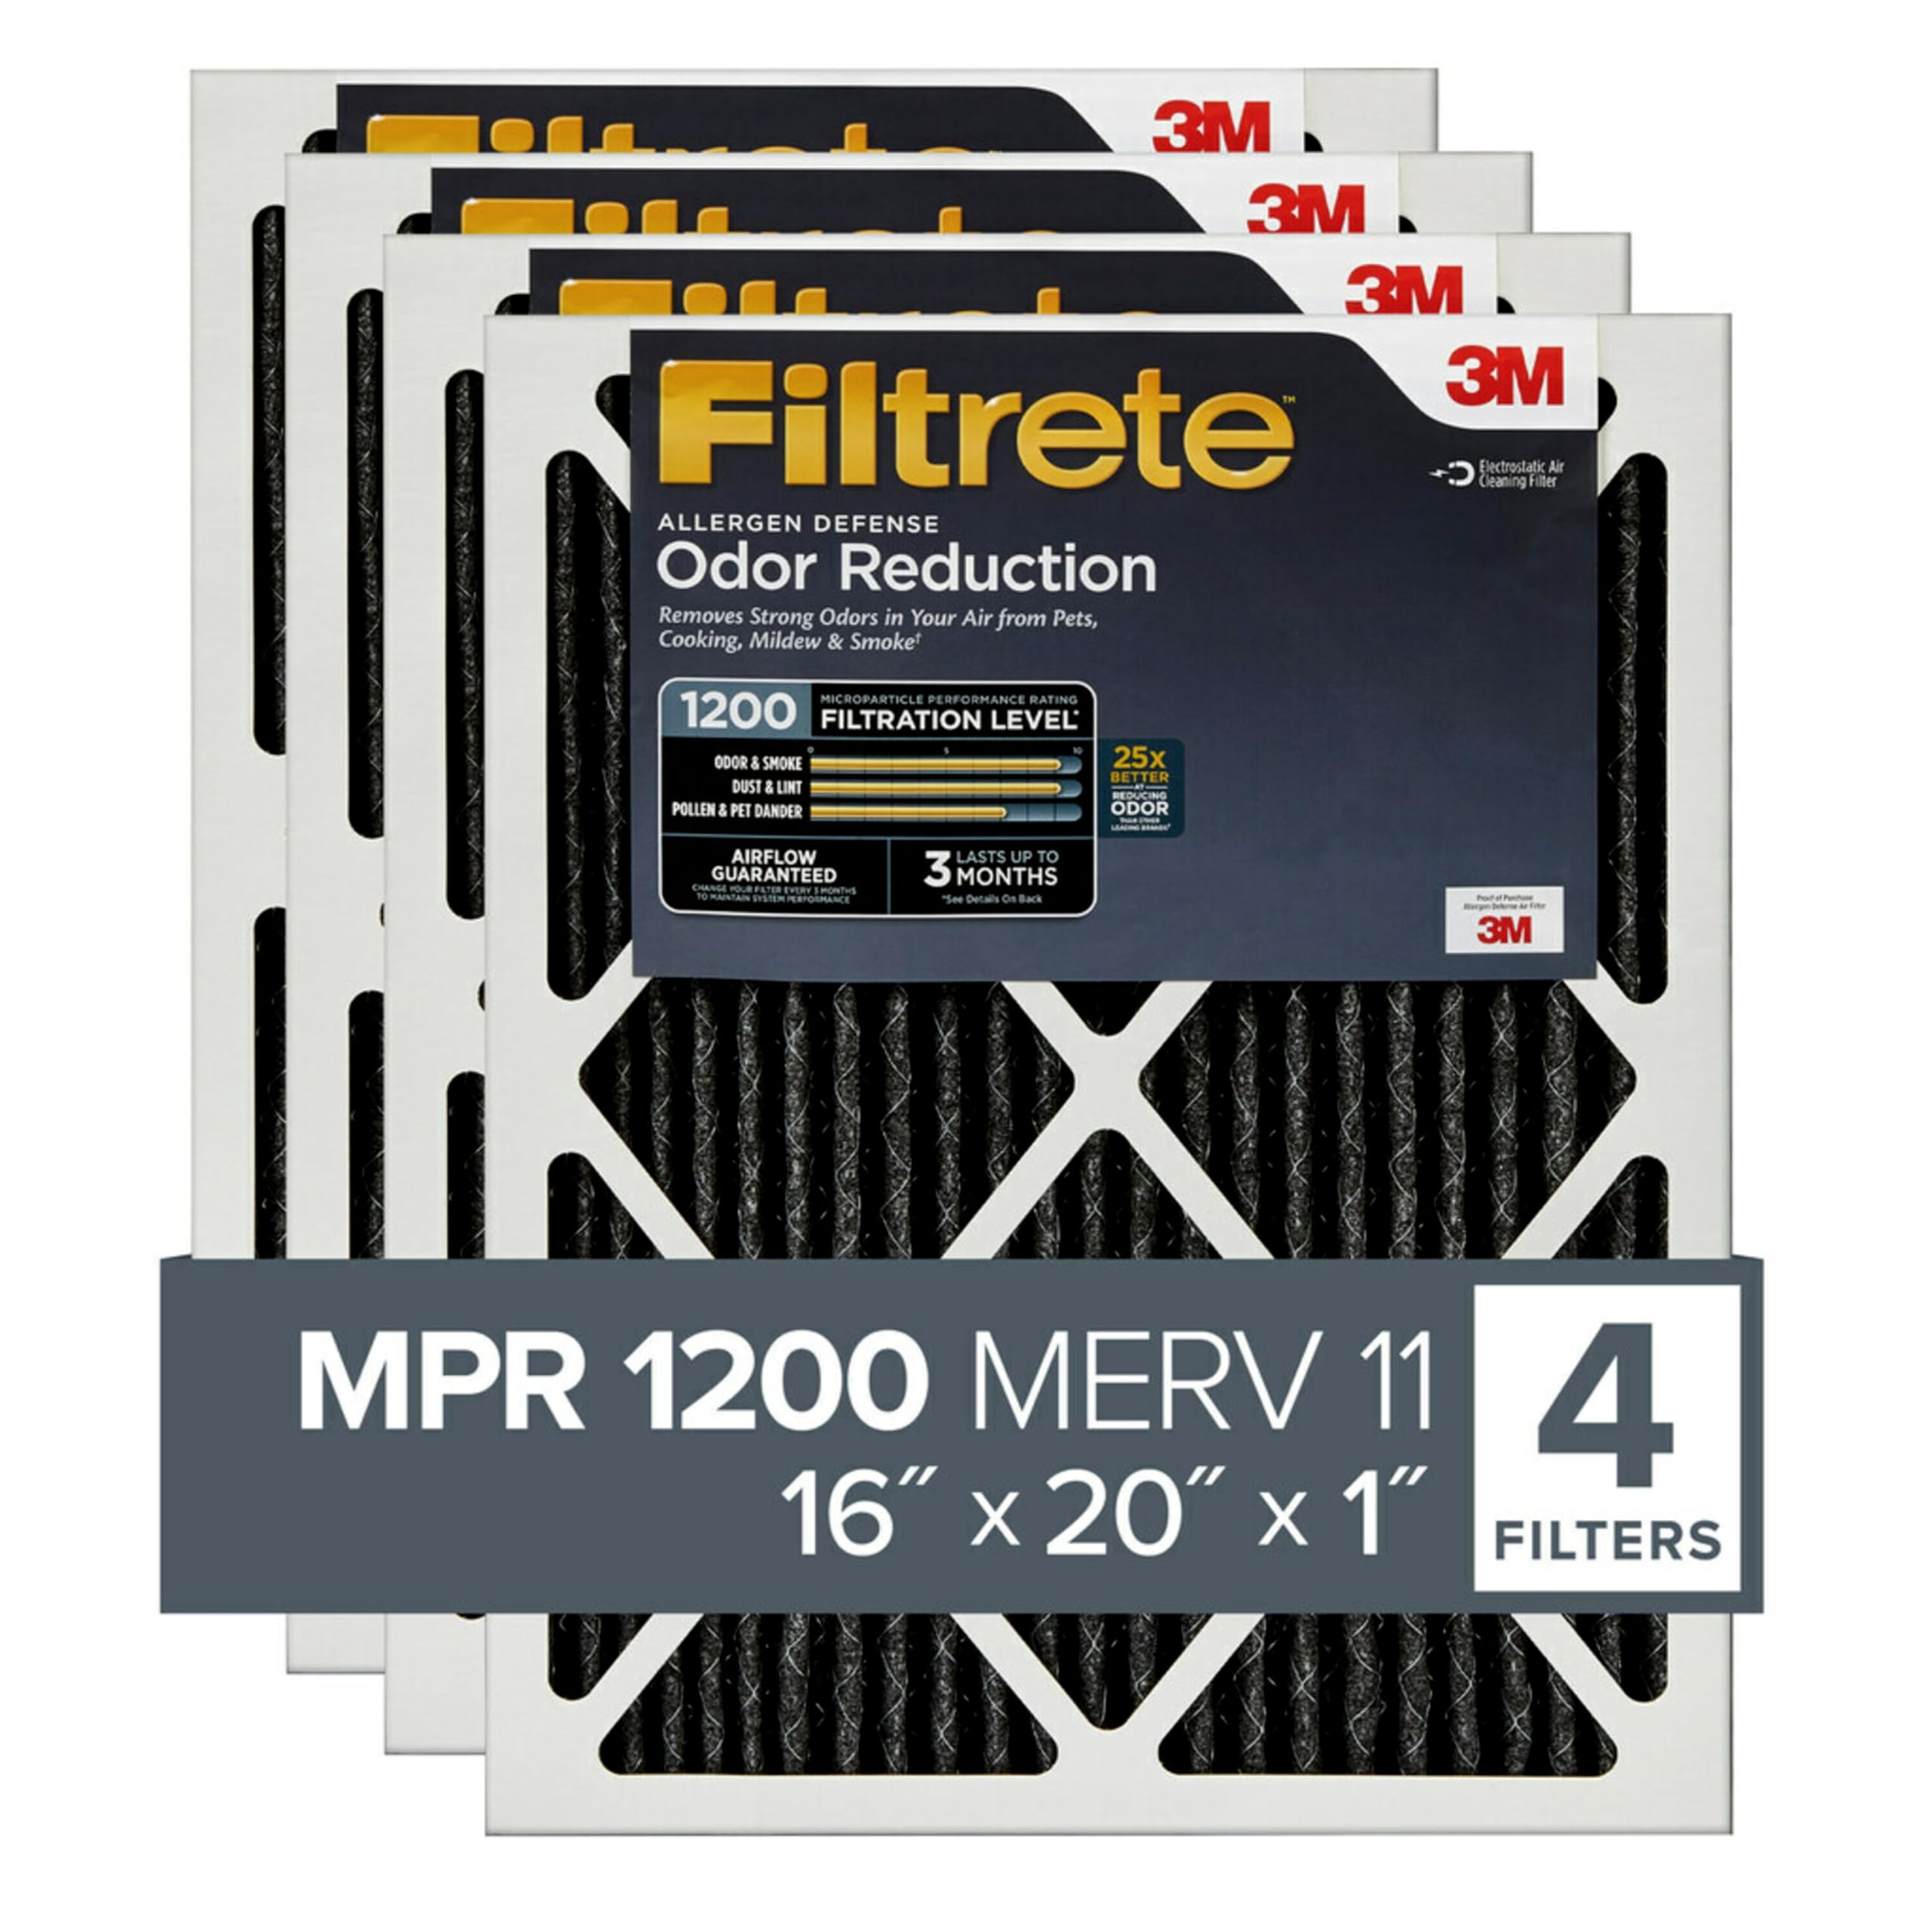 Filtrete 16x20x1 エアフィルター MPR 1200 MERV 11、アレルゲン防御臭気低減、4 パック (正確な寸法 15.69x19.69x0.81)